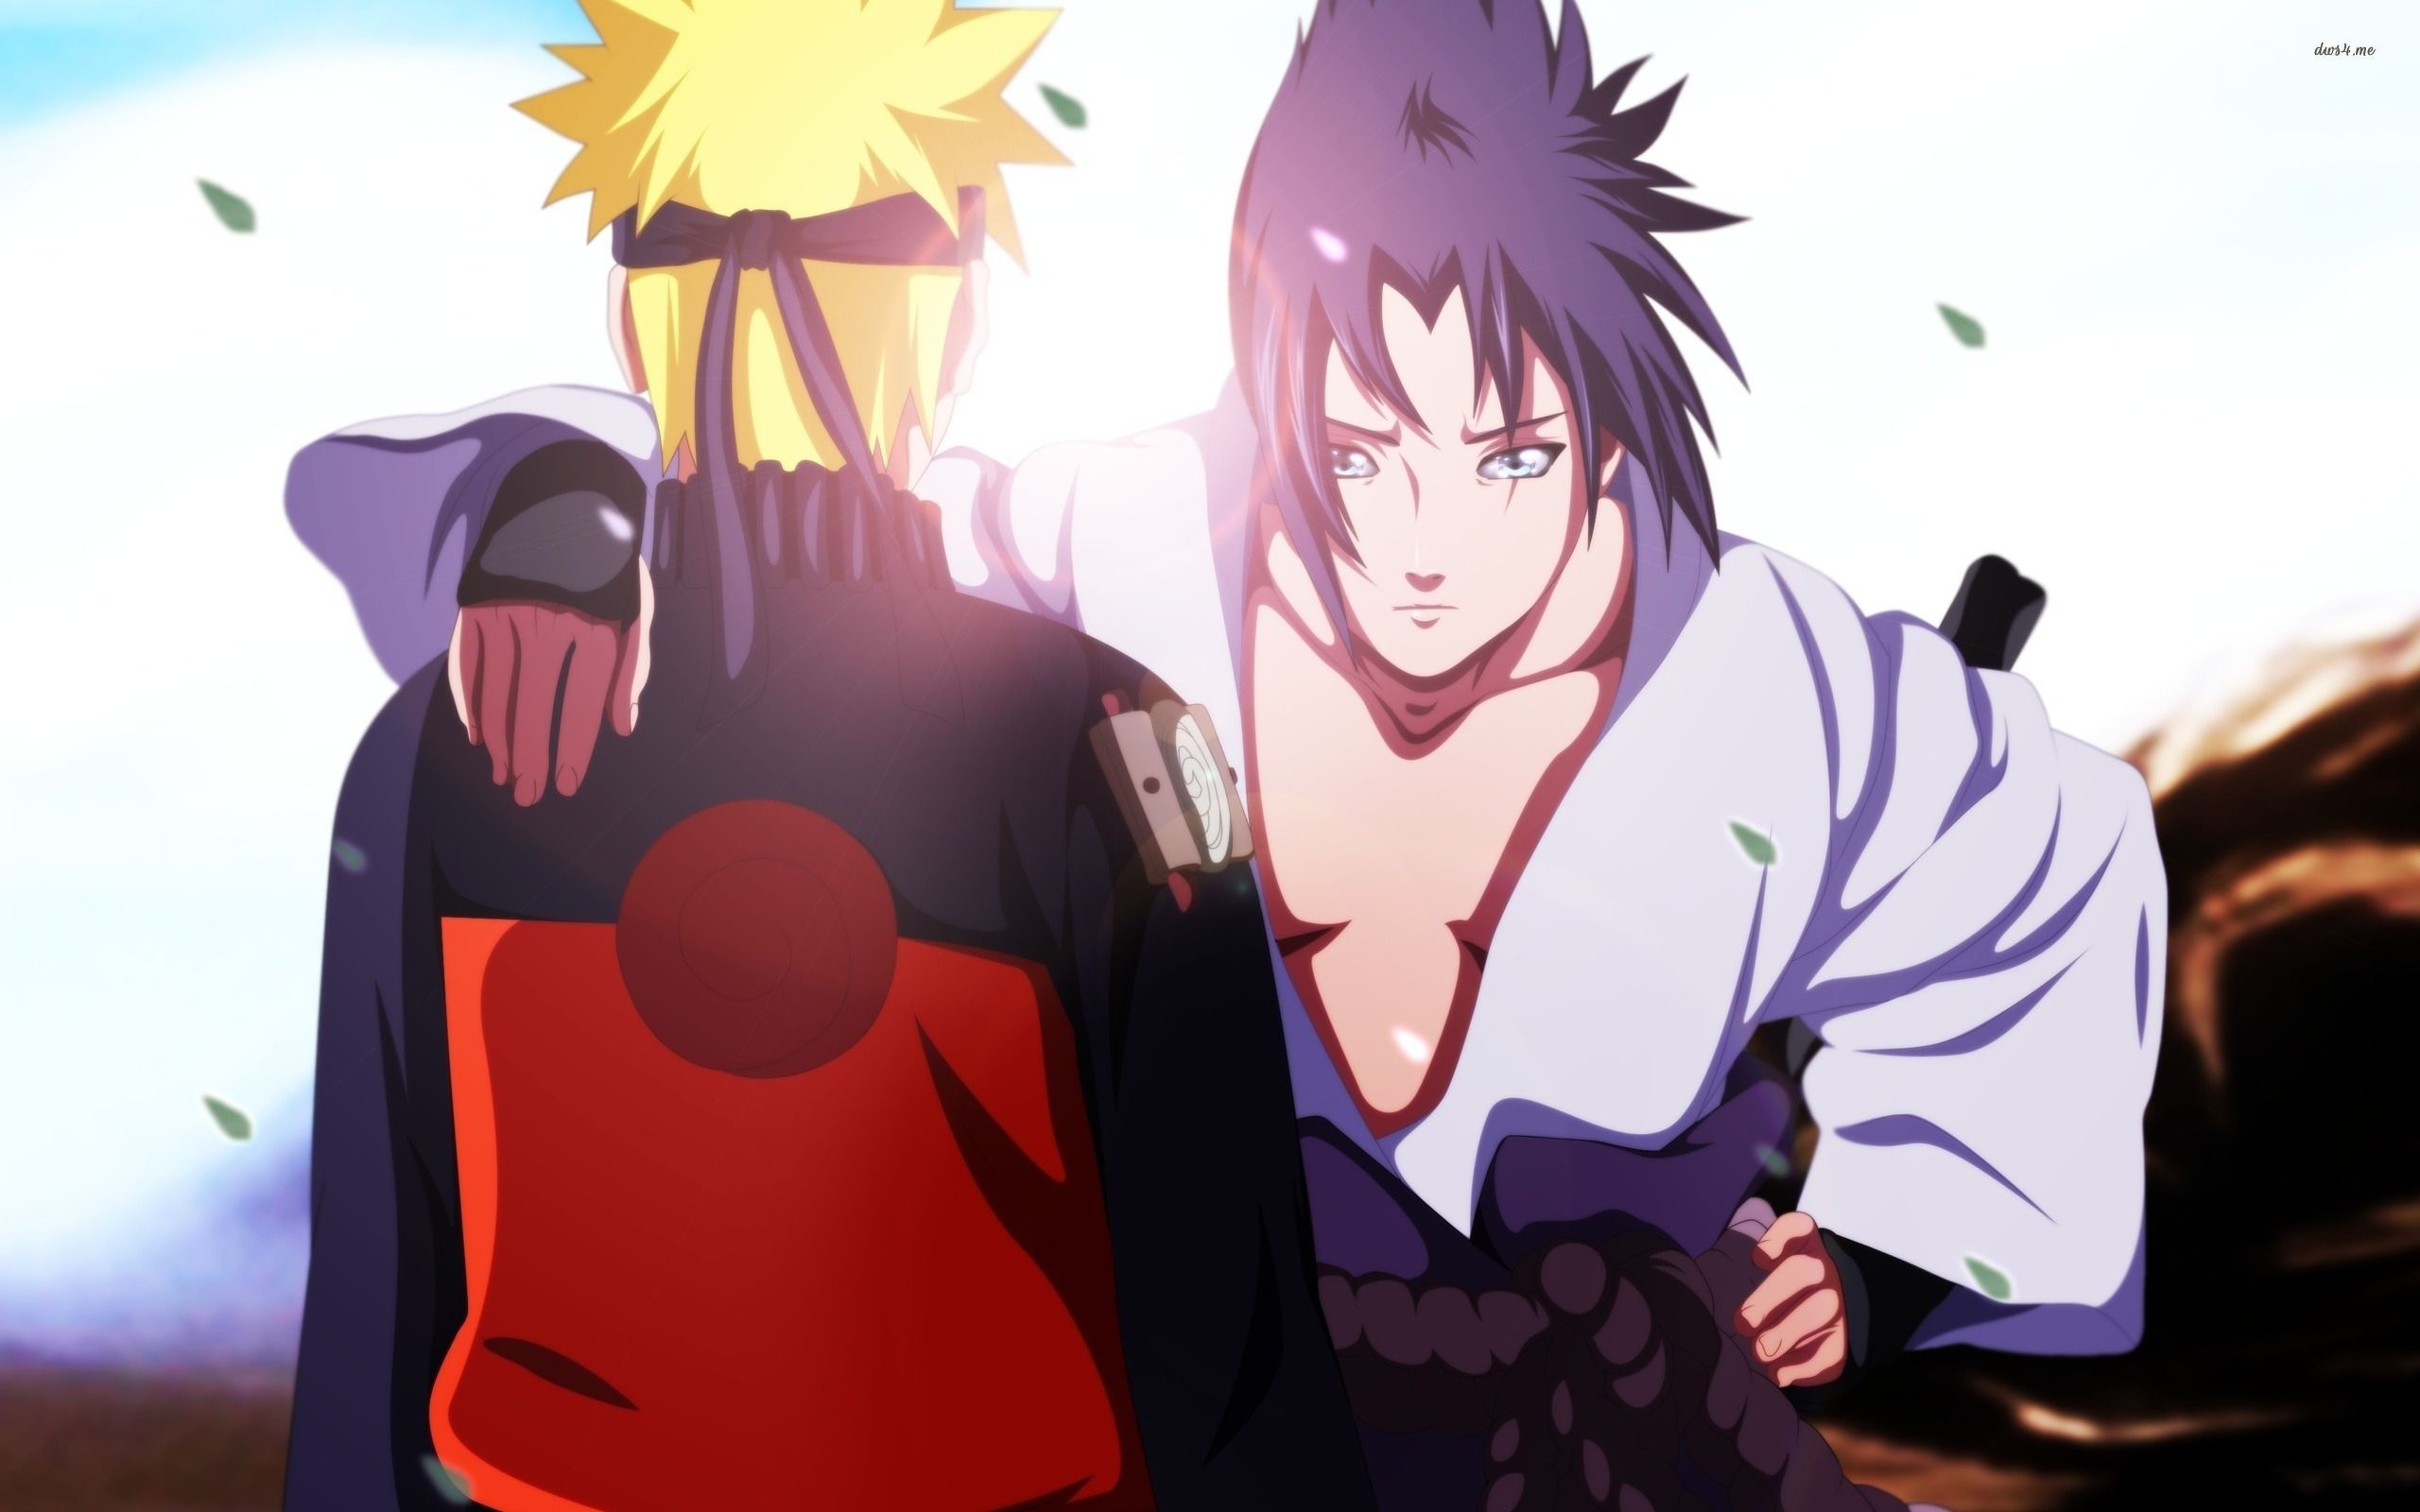 Uchiba and Uzumaki in Naruto wallpaper - Anime wallpapers - #46508